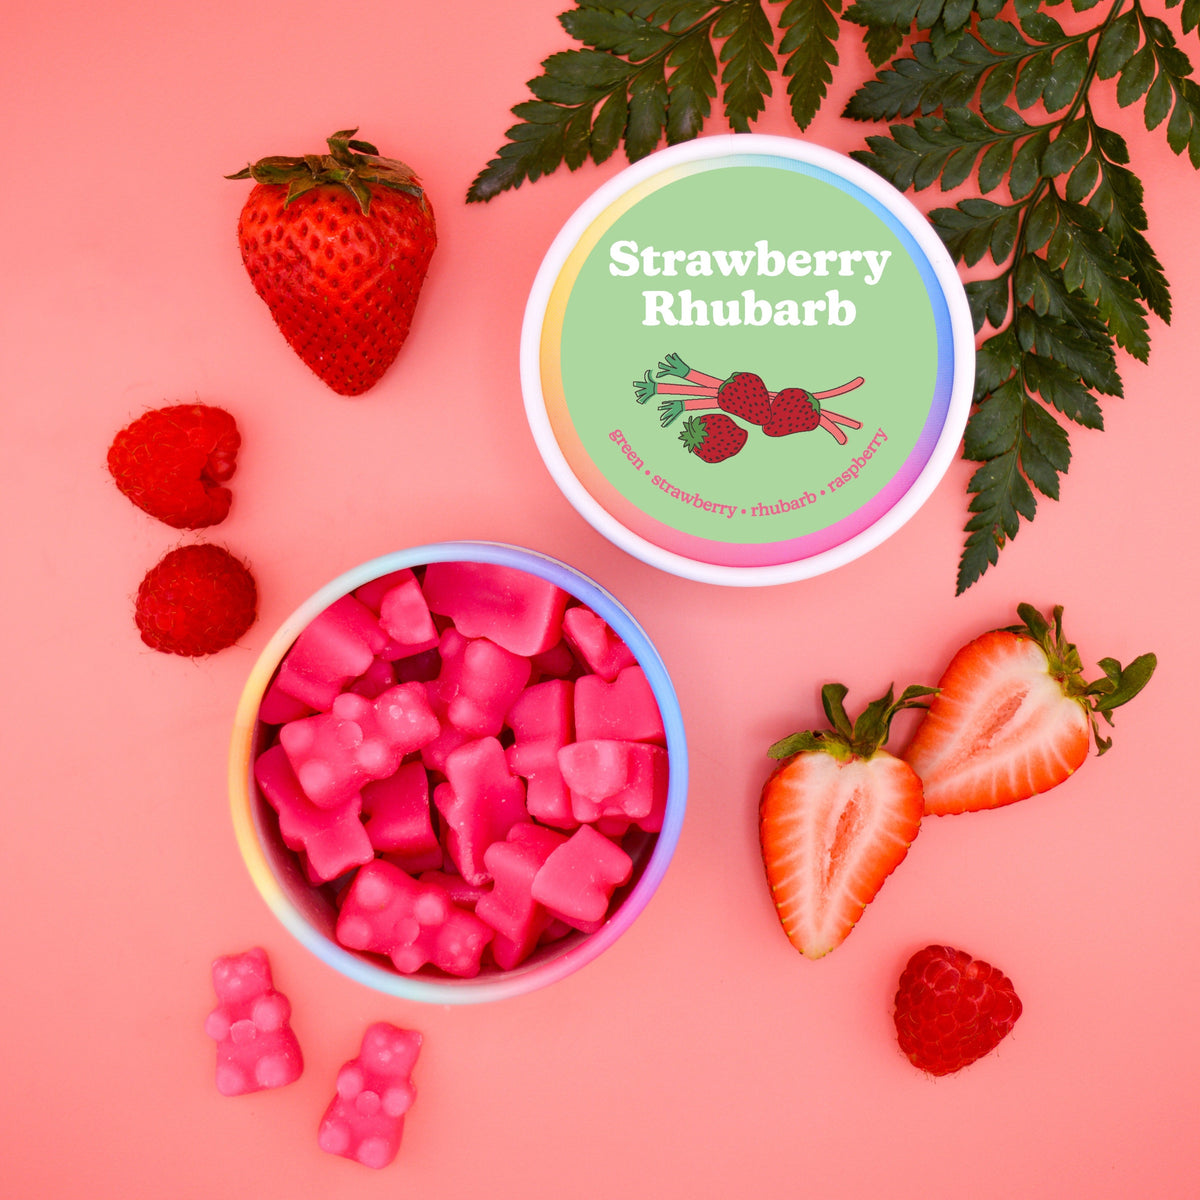 Strawberry Rhubarb Wax Melts